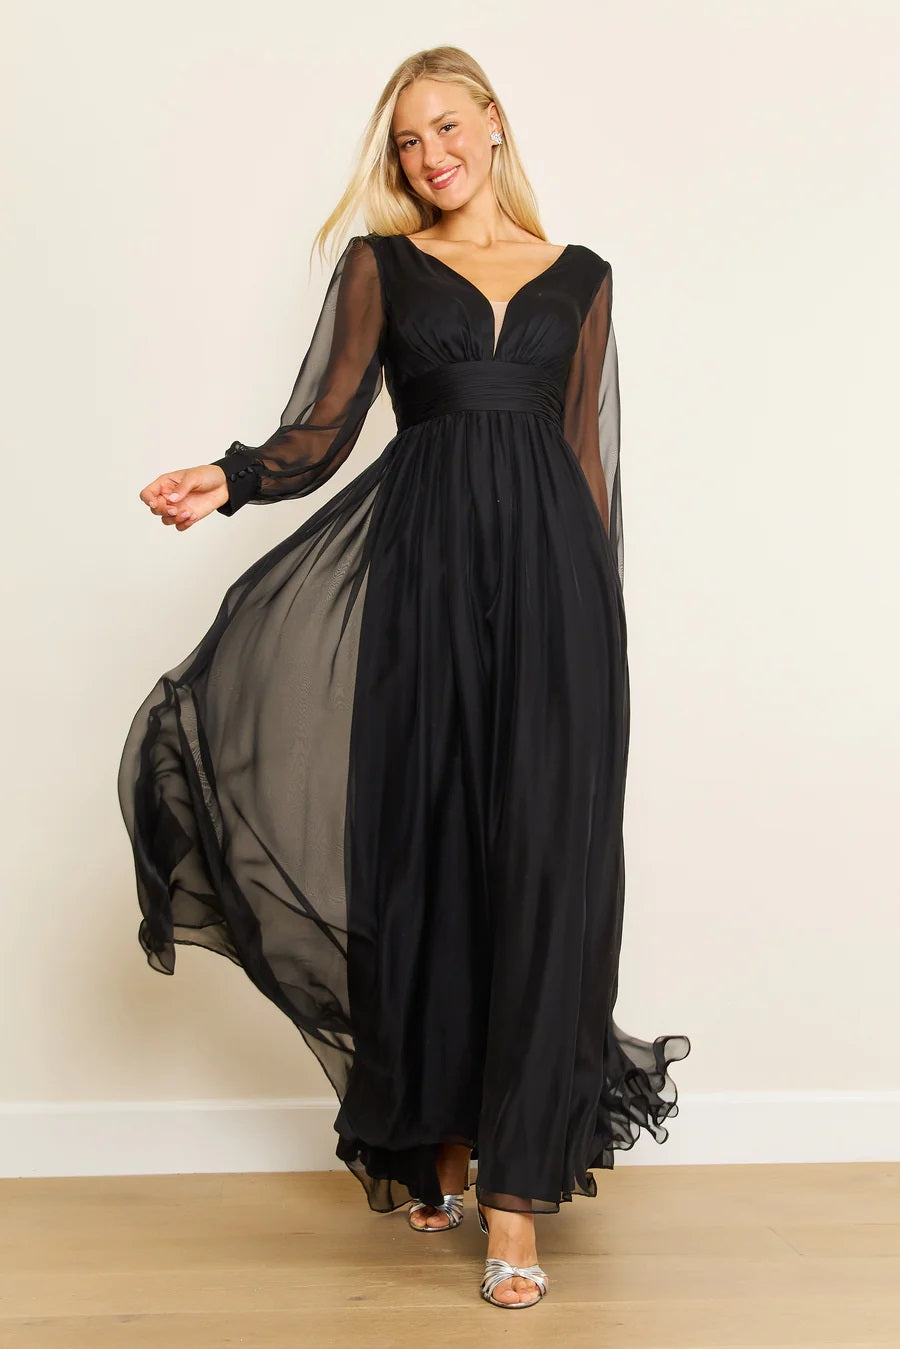 Blush Cinderella Divine CD0192 Long Sleeve Evening Formal Dress